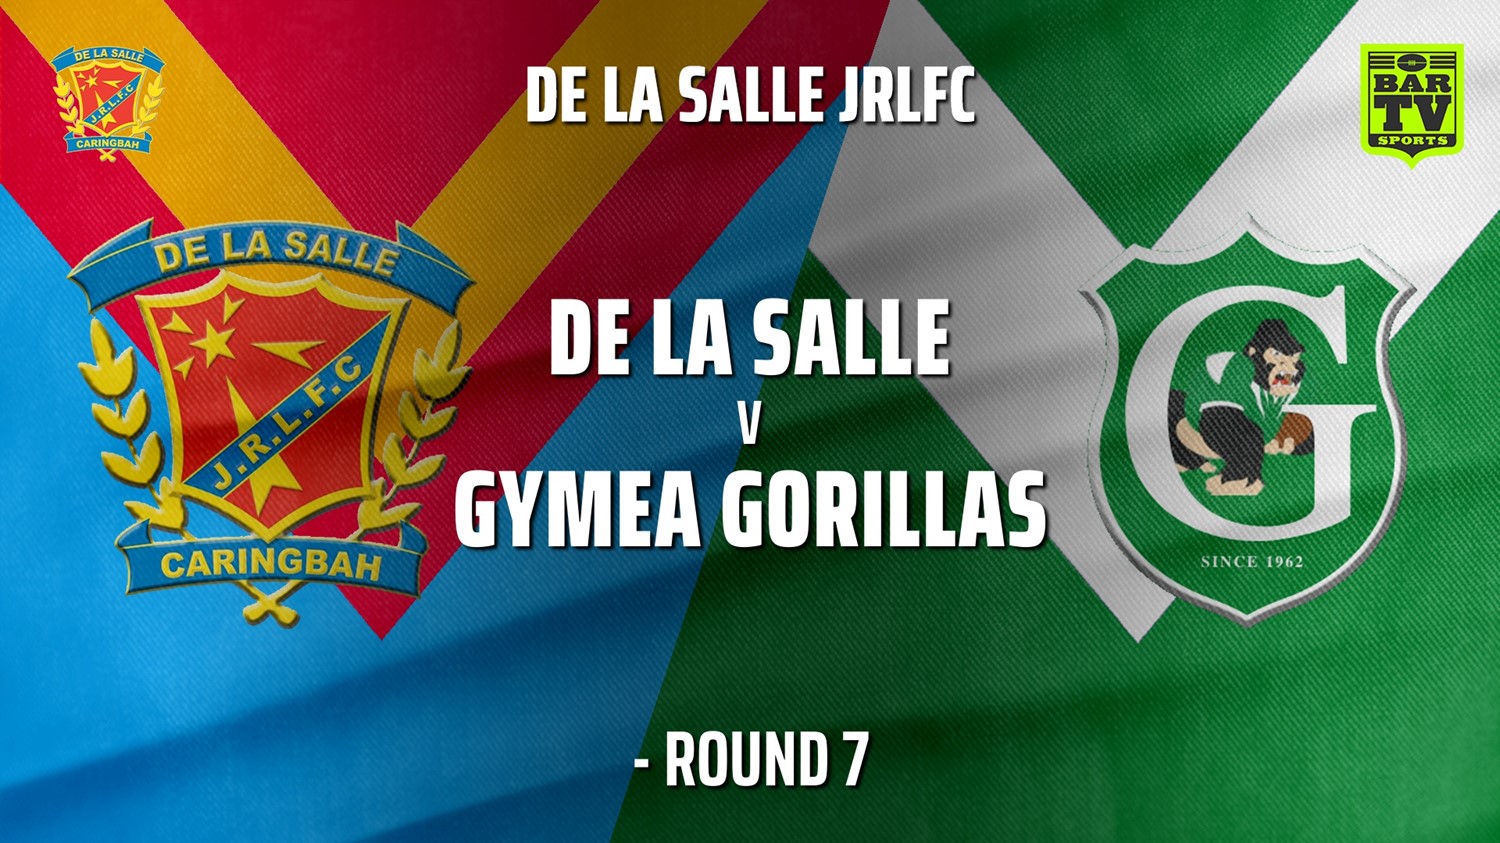 210620-De La Salle (Cronulla) - Under 17s Gold - Round 7 - De La Salle v Gymea Gorillas Slate Image